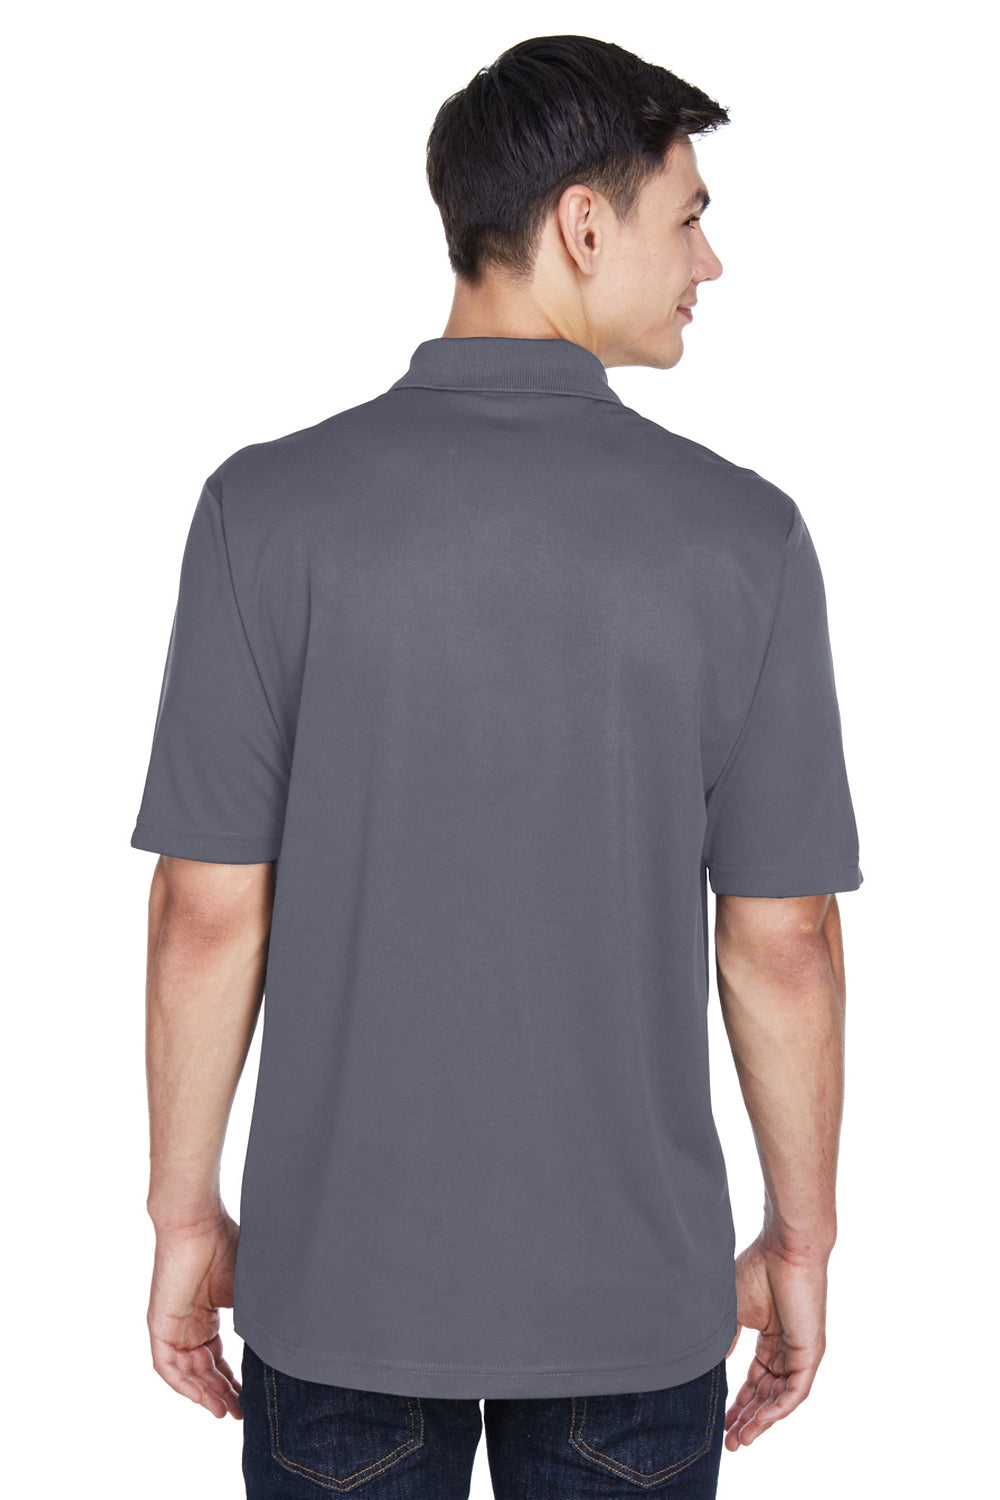 Core 365 CE101 Mens Balance Performance Moisture Wicking Short Sleeve Polo Shirt Navy Blue/Grey Back